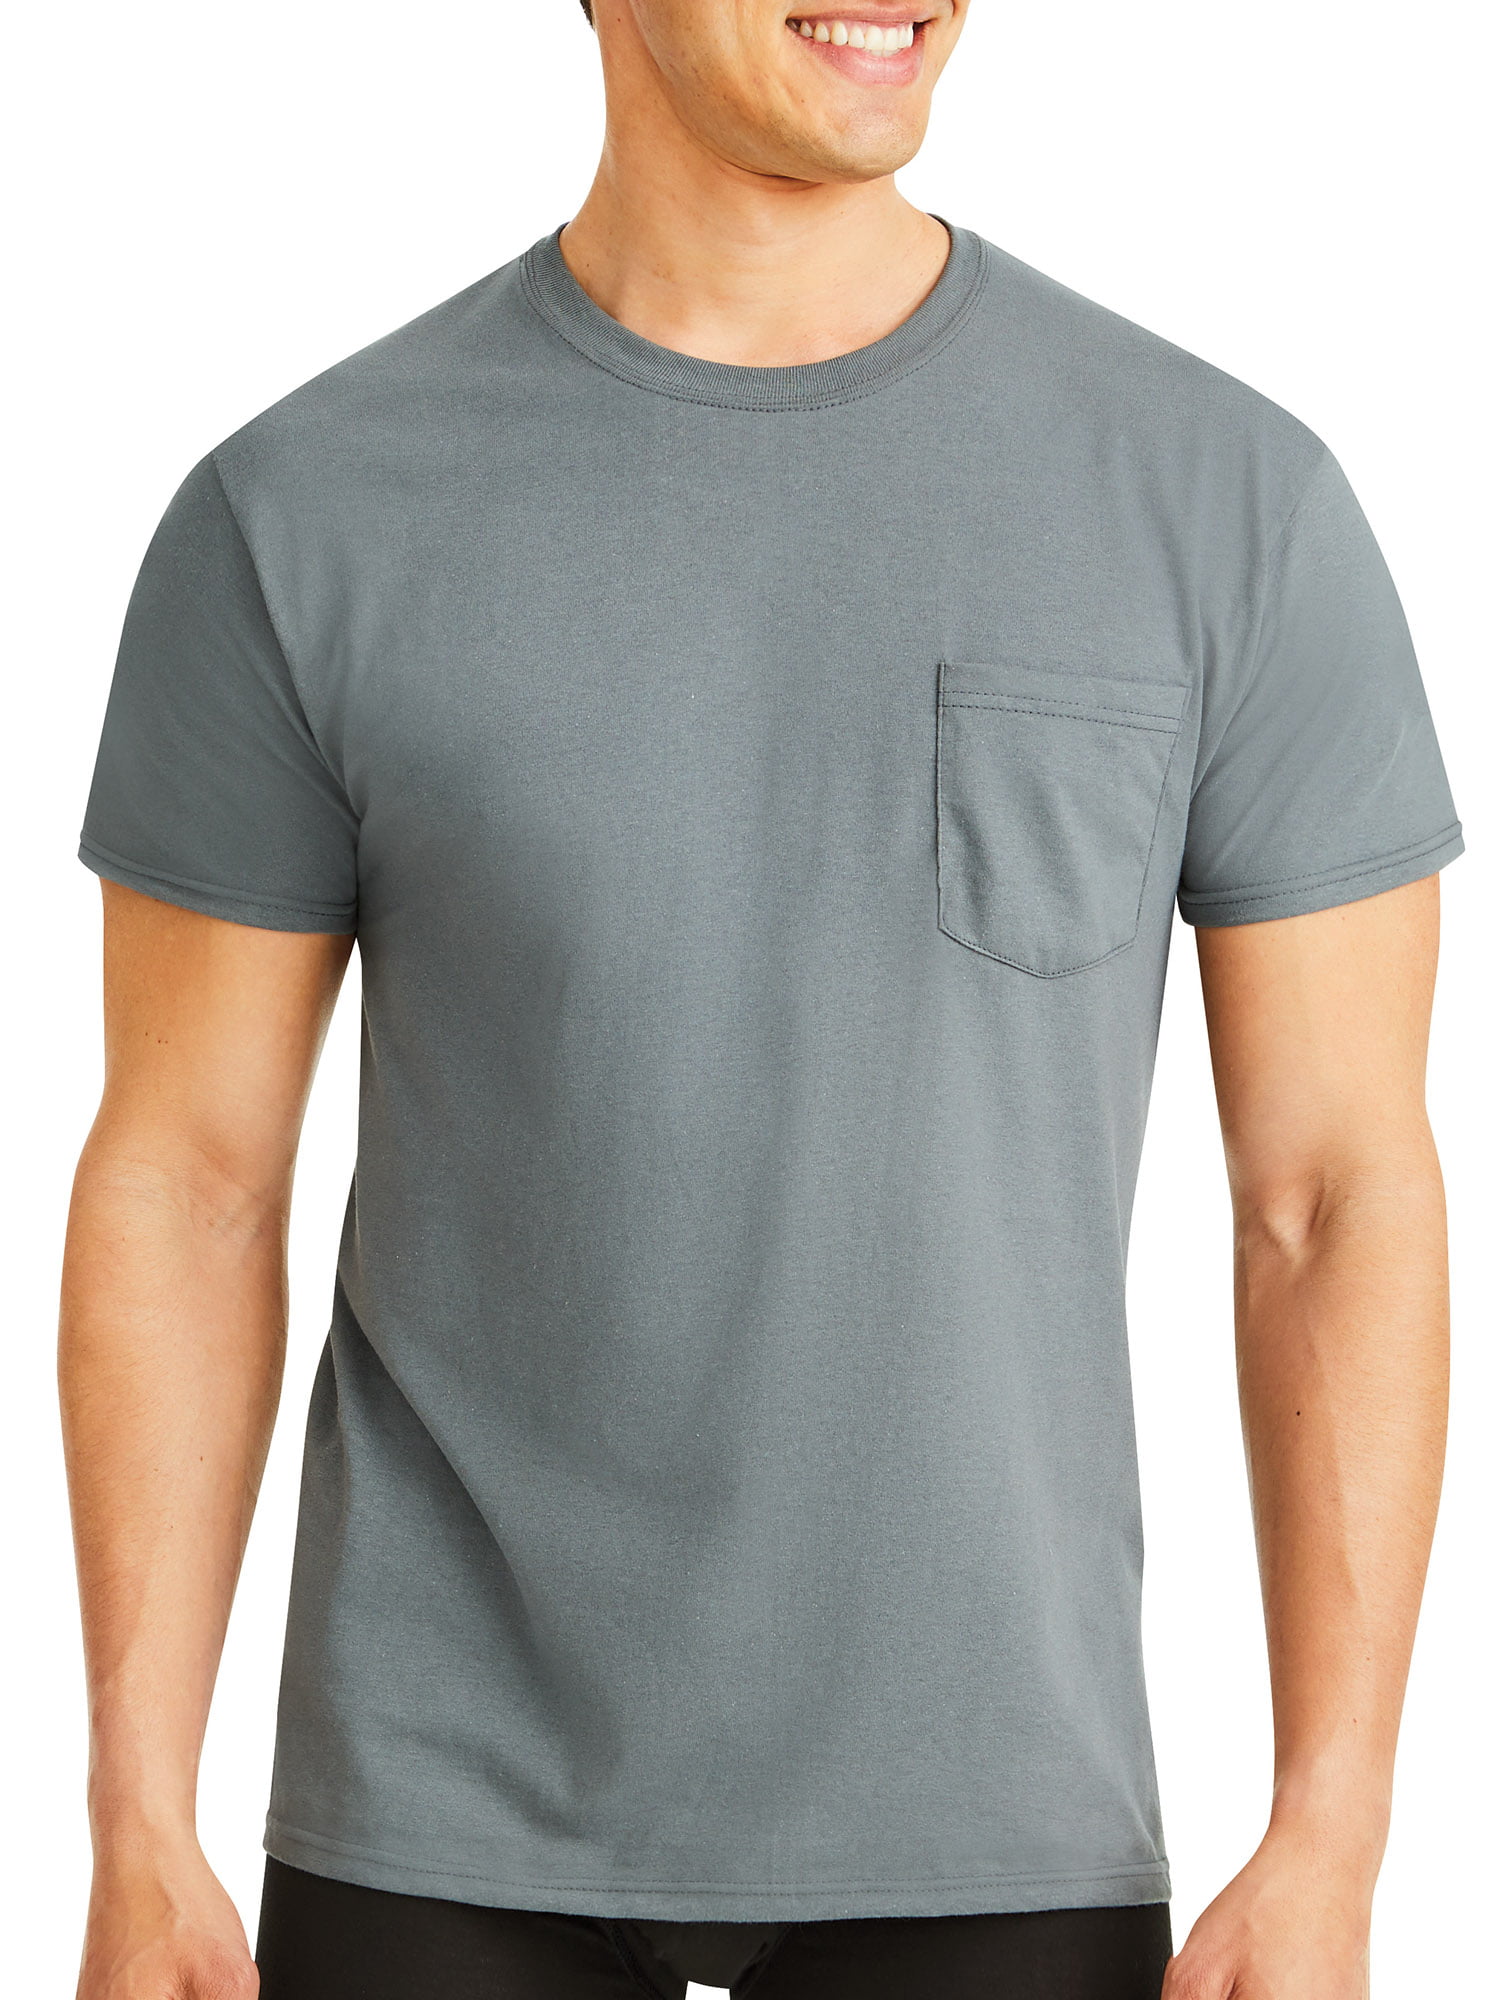 Hanes - Hanes Big & Tall Men's ComfortSoft Tagless Pocket T-Shirt 6